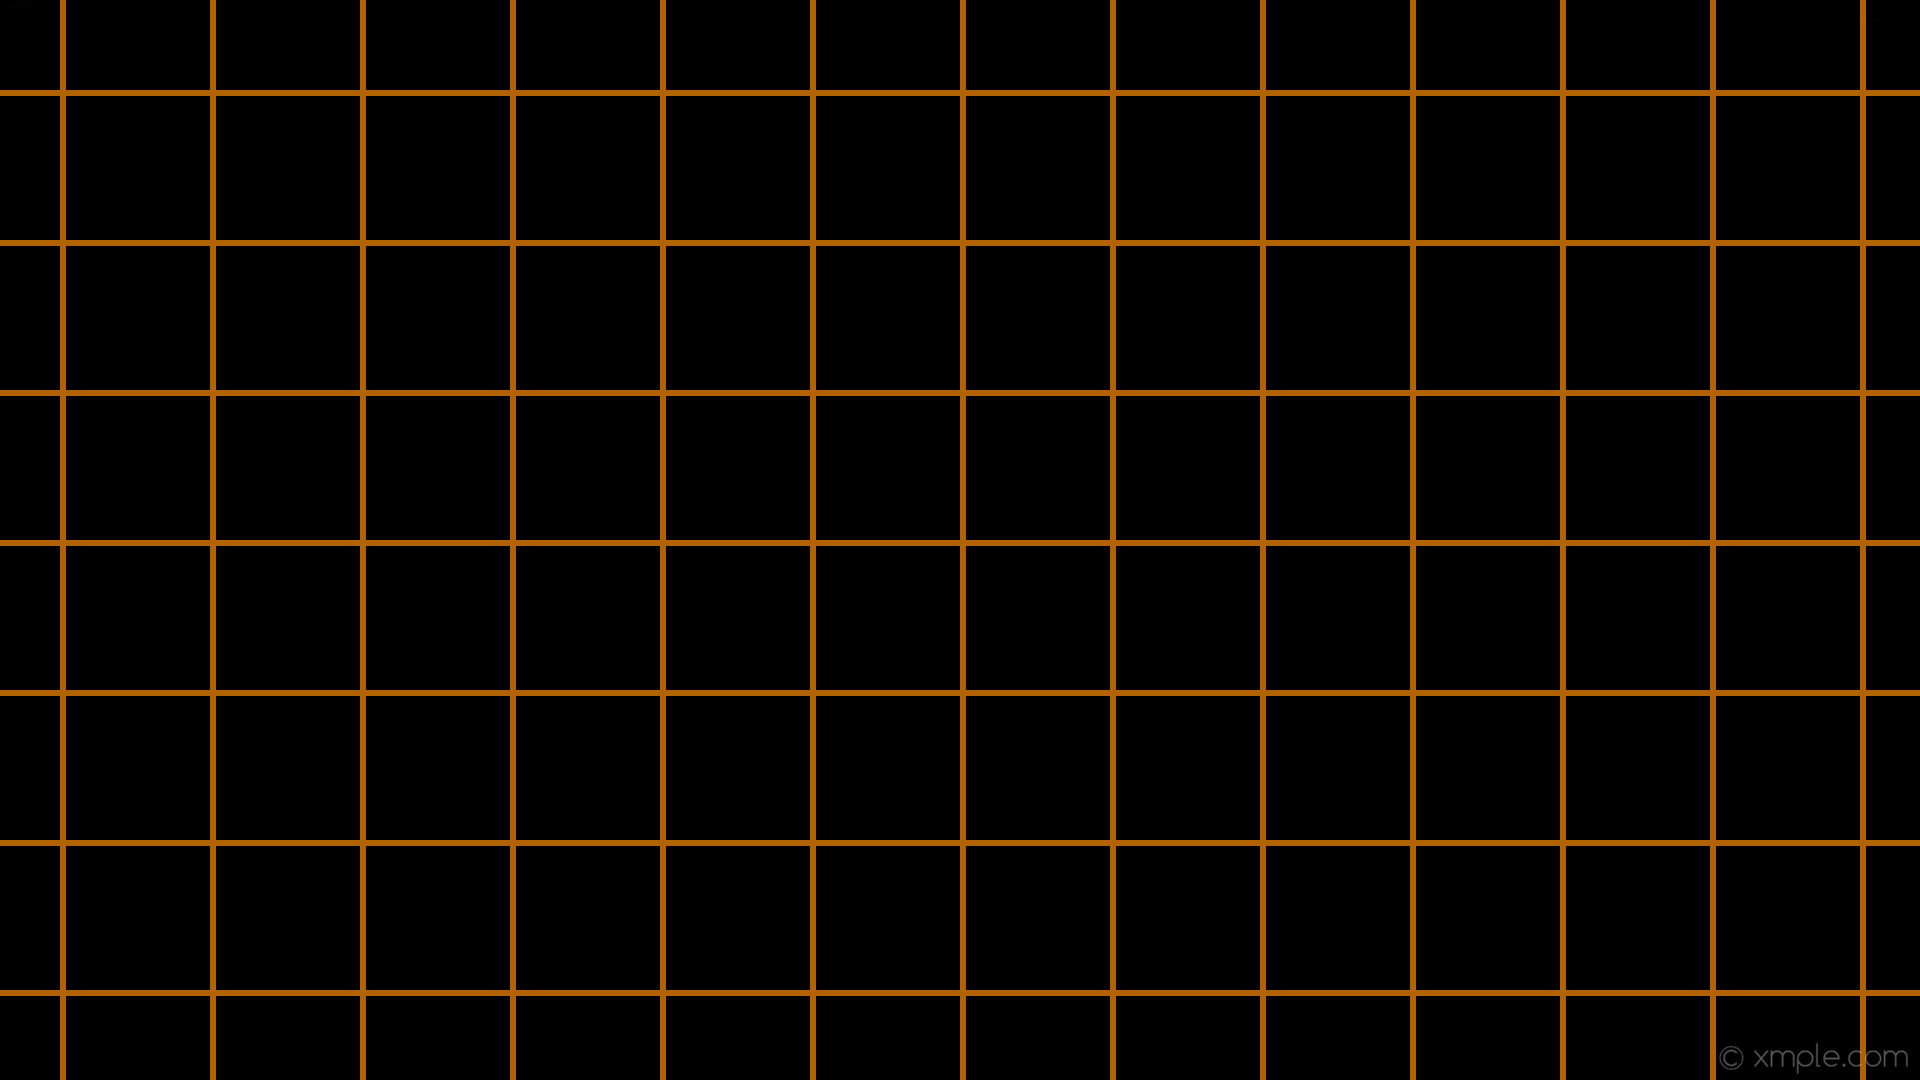 1920x1080 wallpaper graph paper orange black grid dark orange #000000 #ff8c00 0Â° 6px  150px